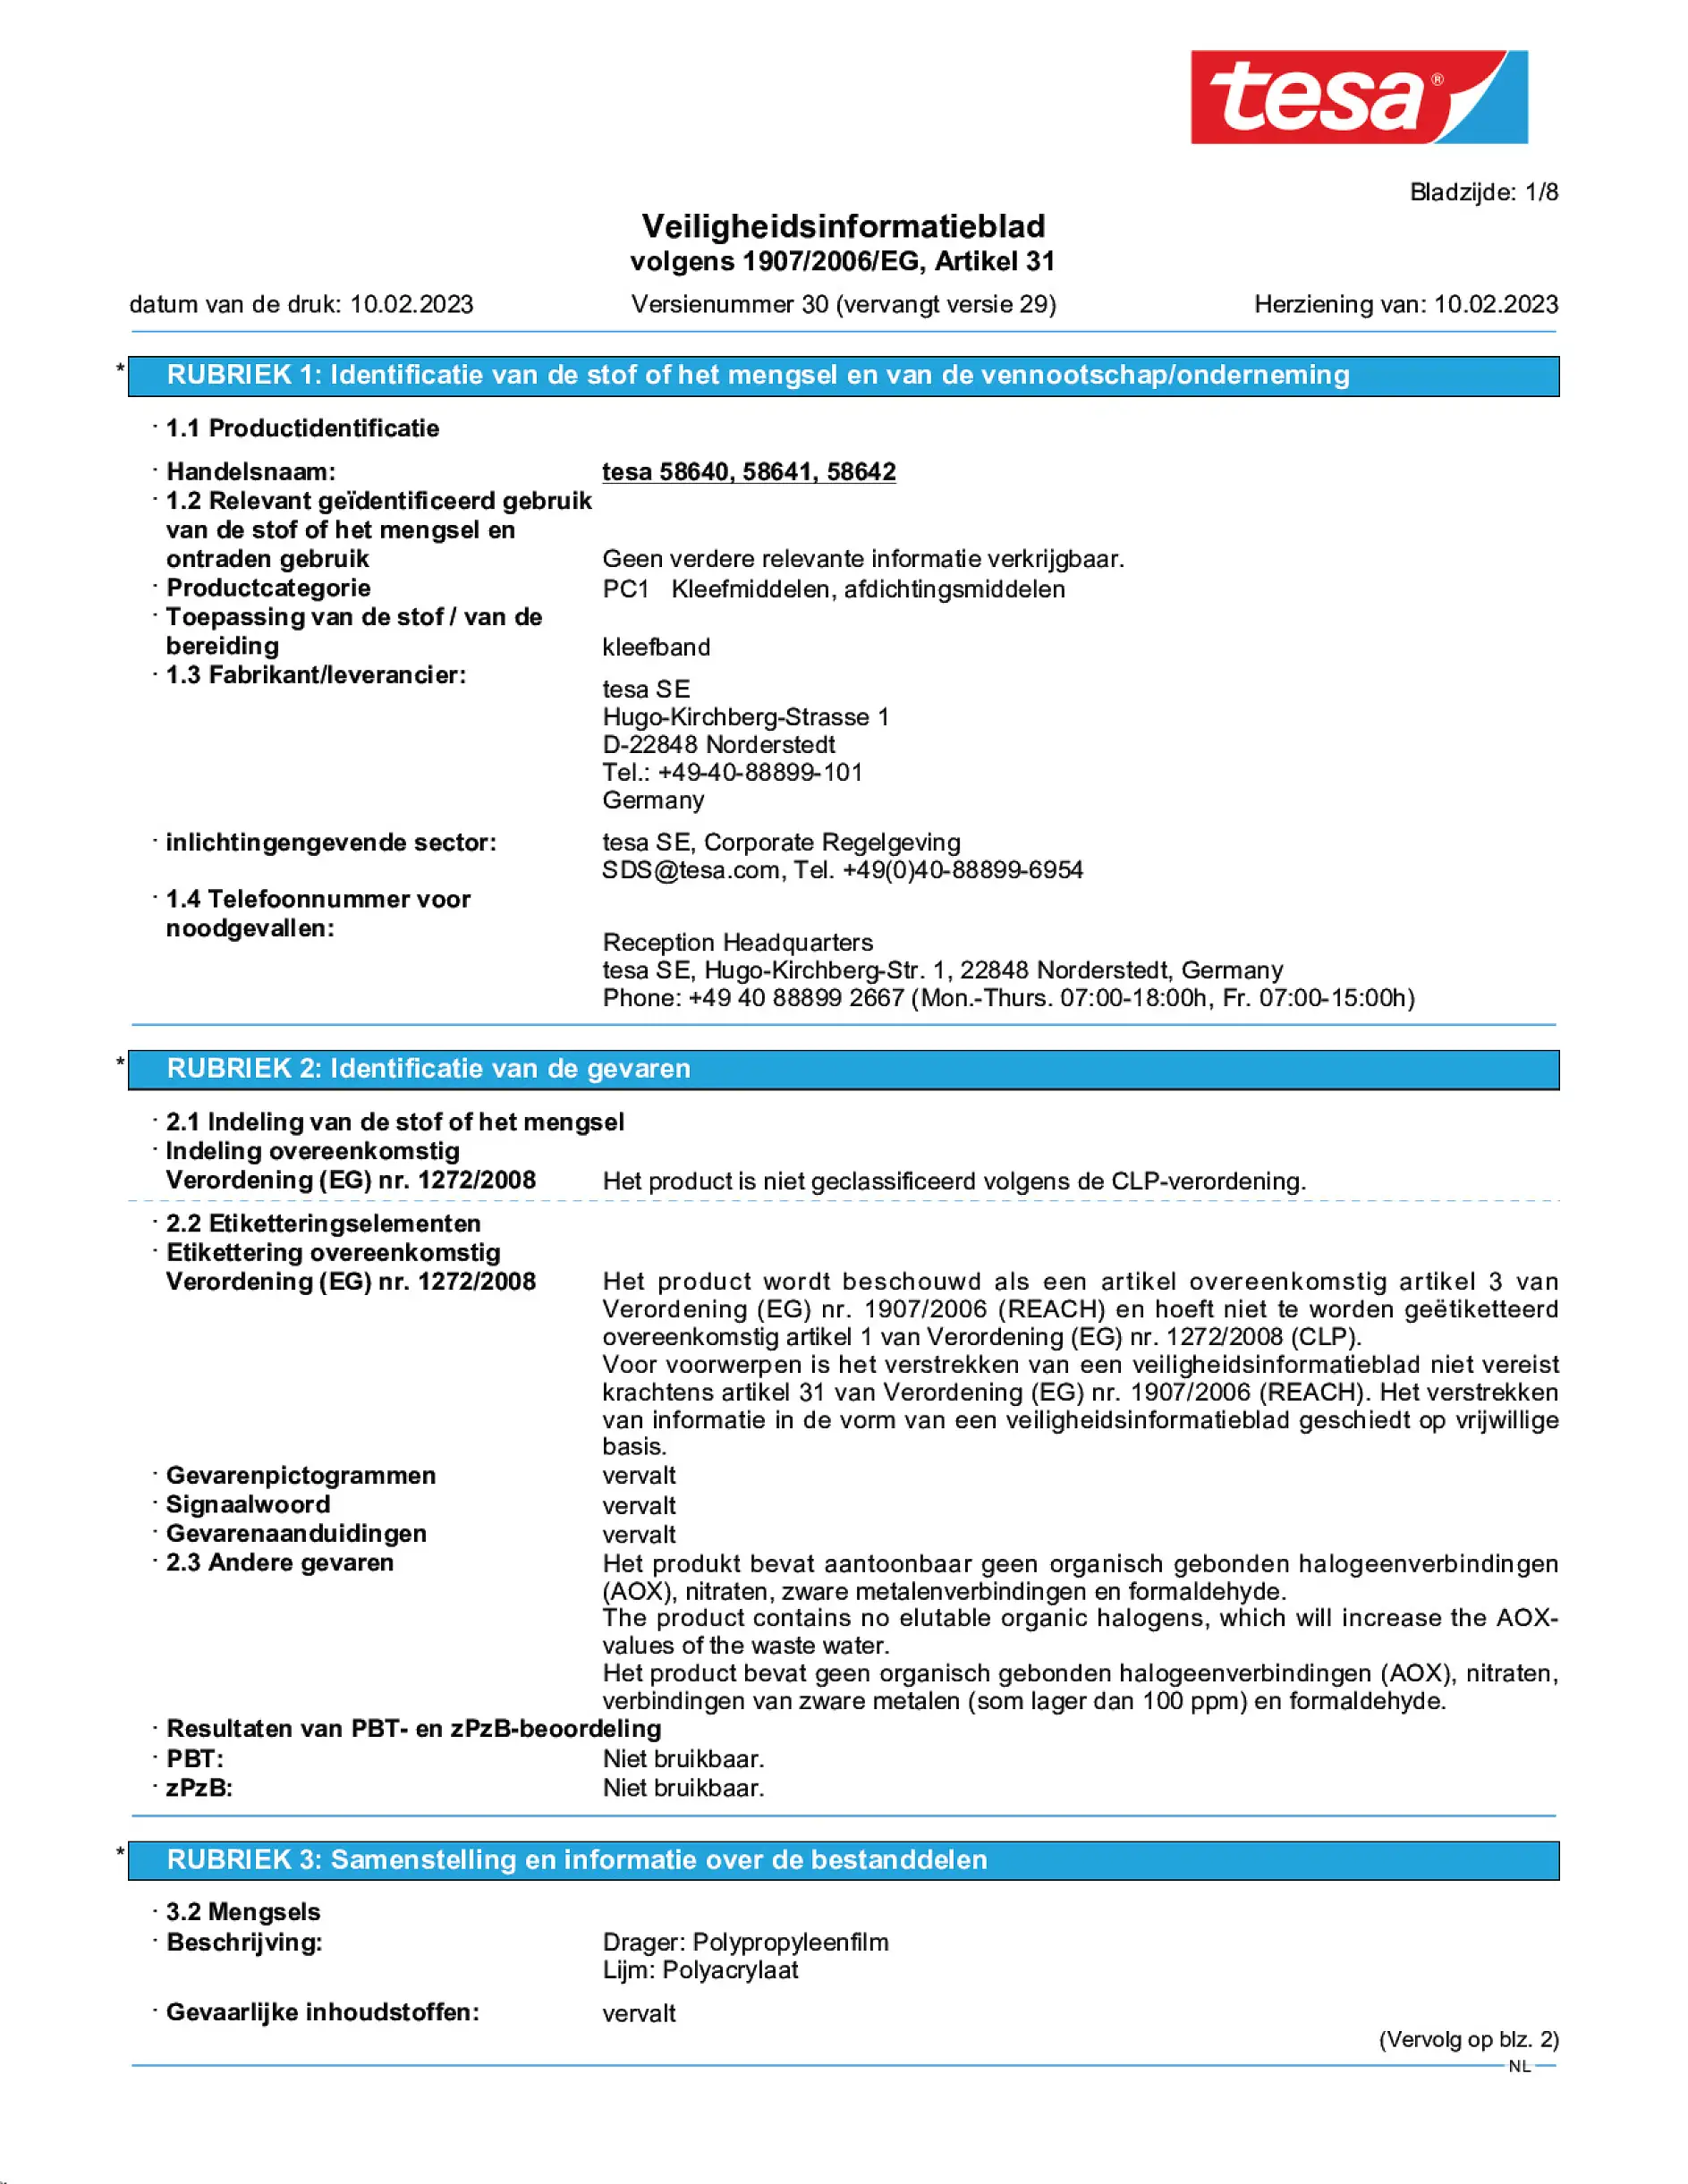 Safety data sheet_tesapack® 58640_nl-NL_v30